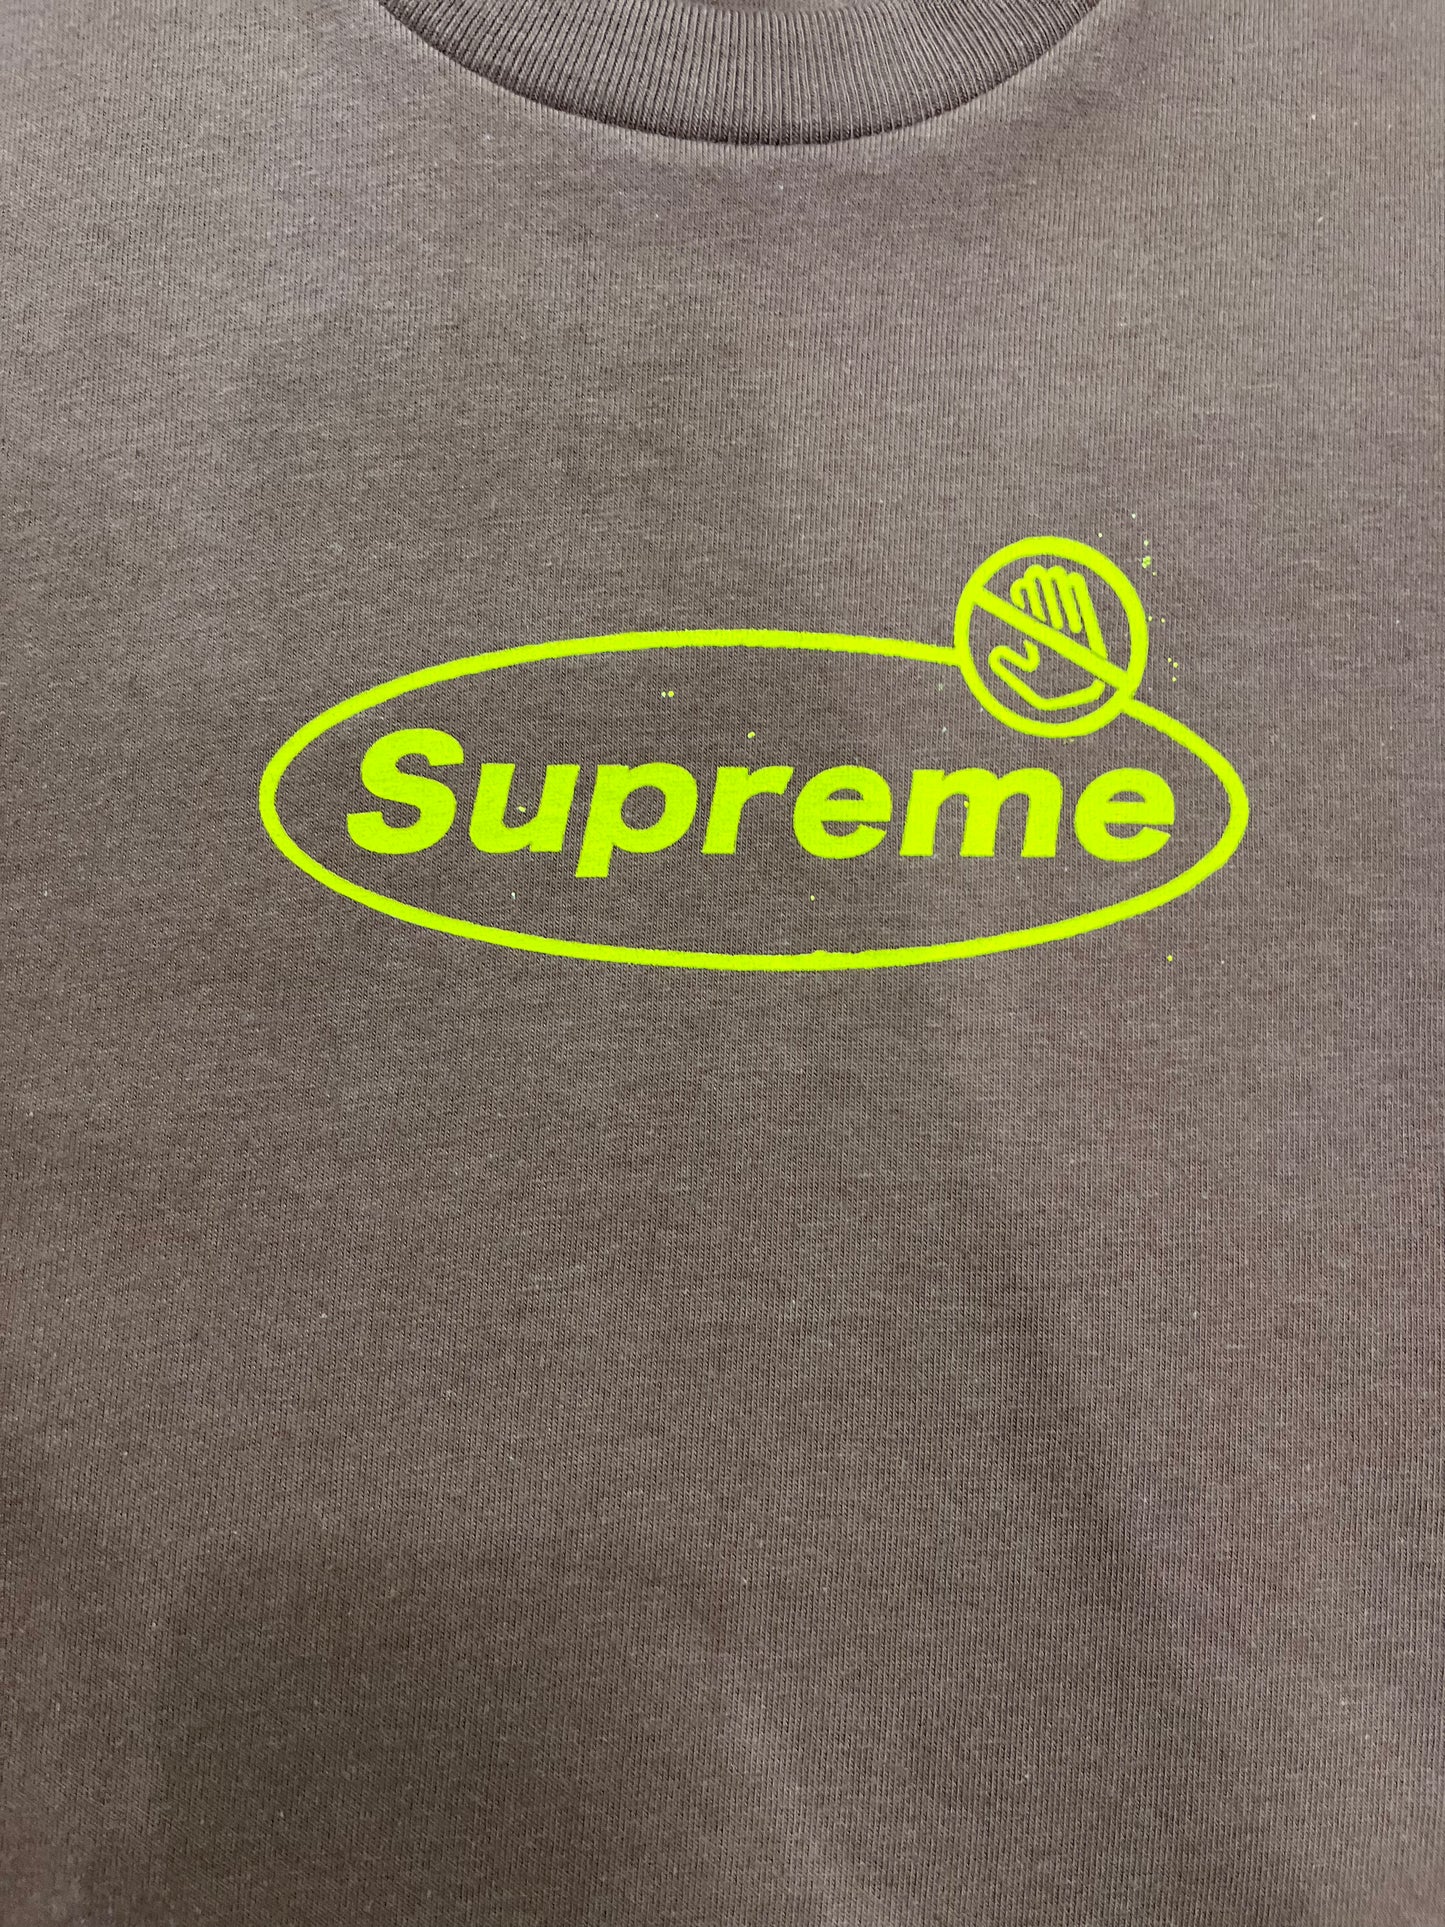 Supreme Warning Tee Brown, T-Shirt - Supra Sneakers